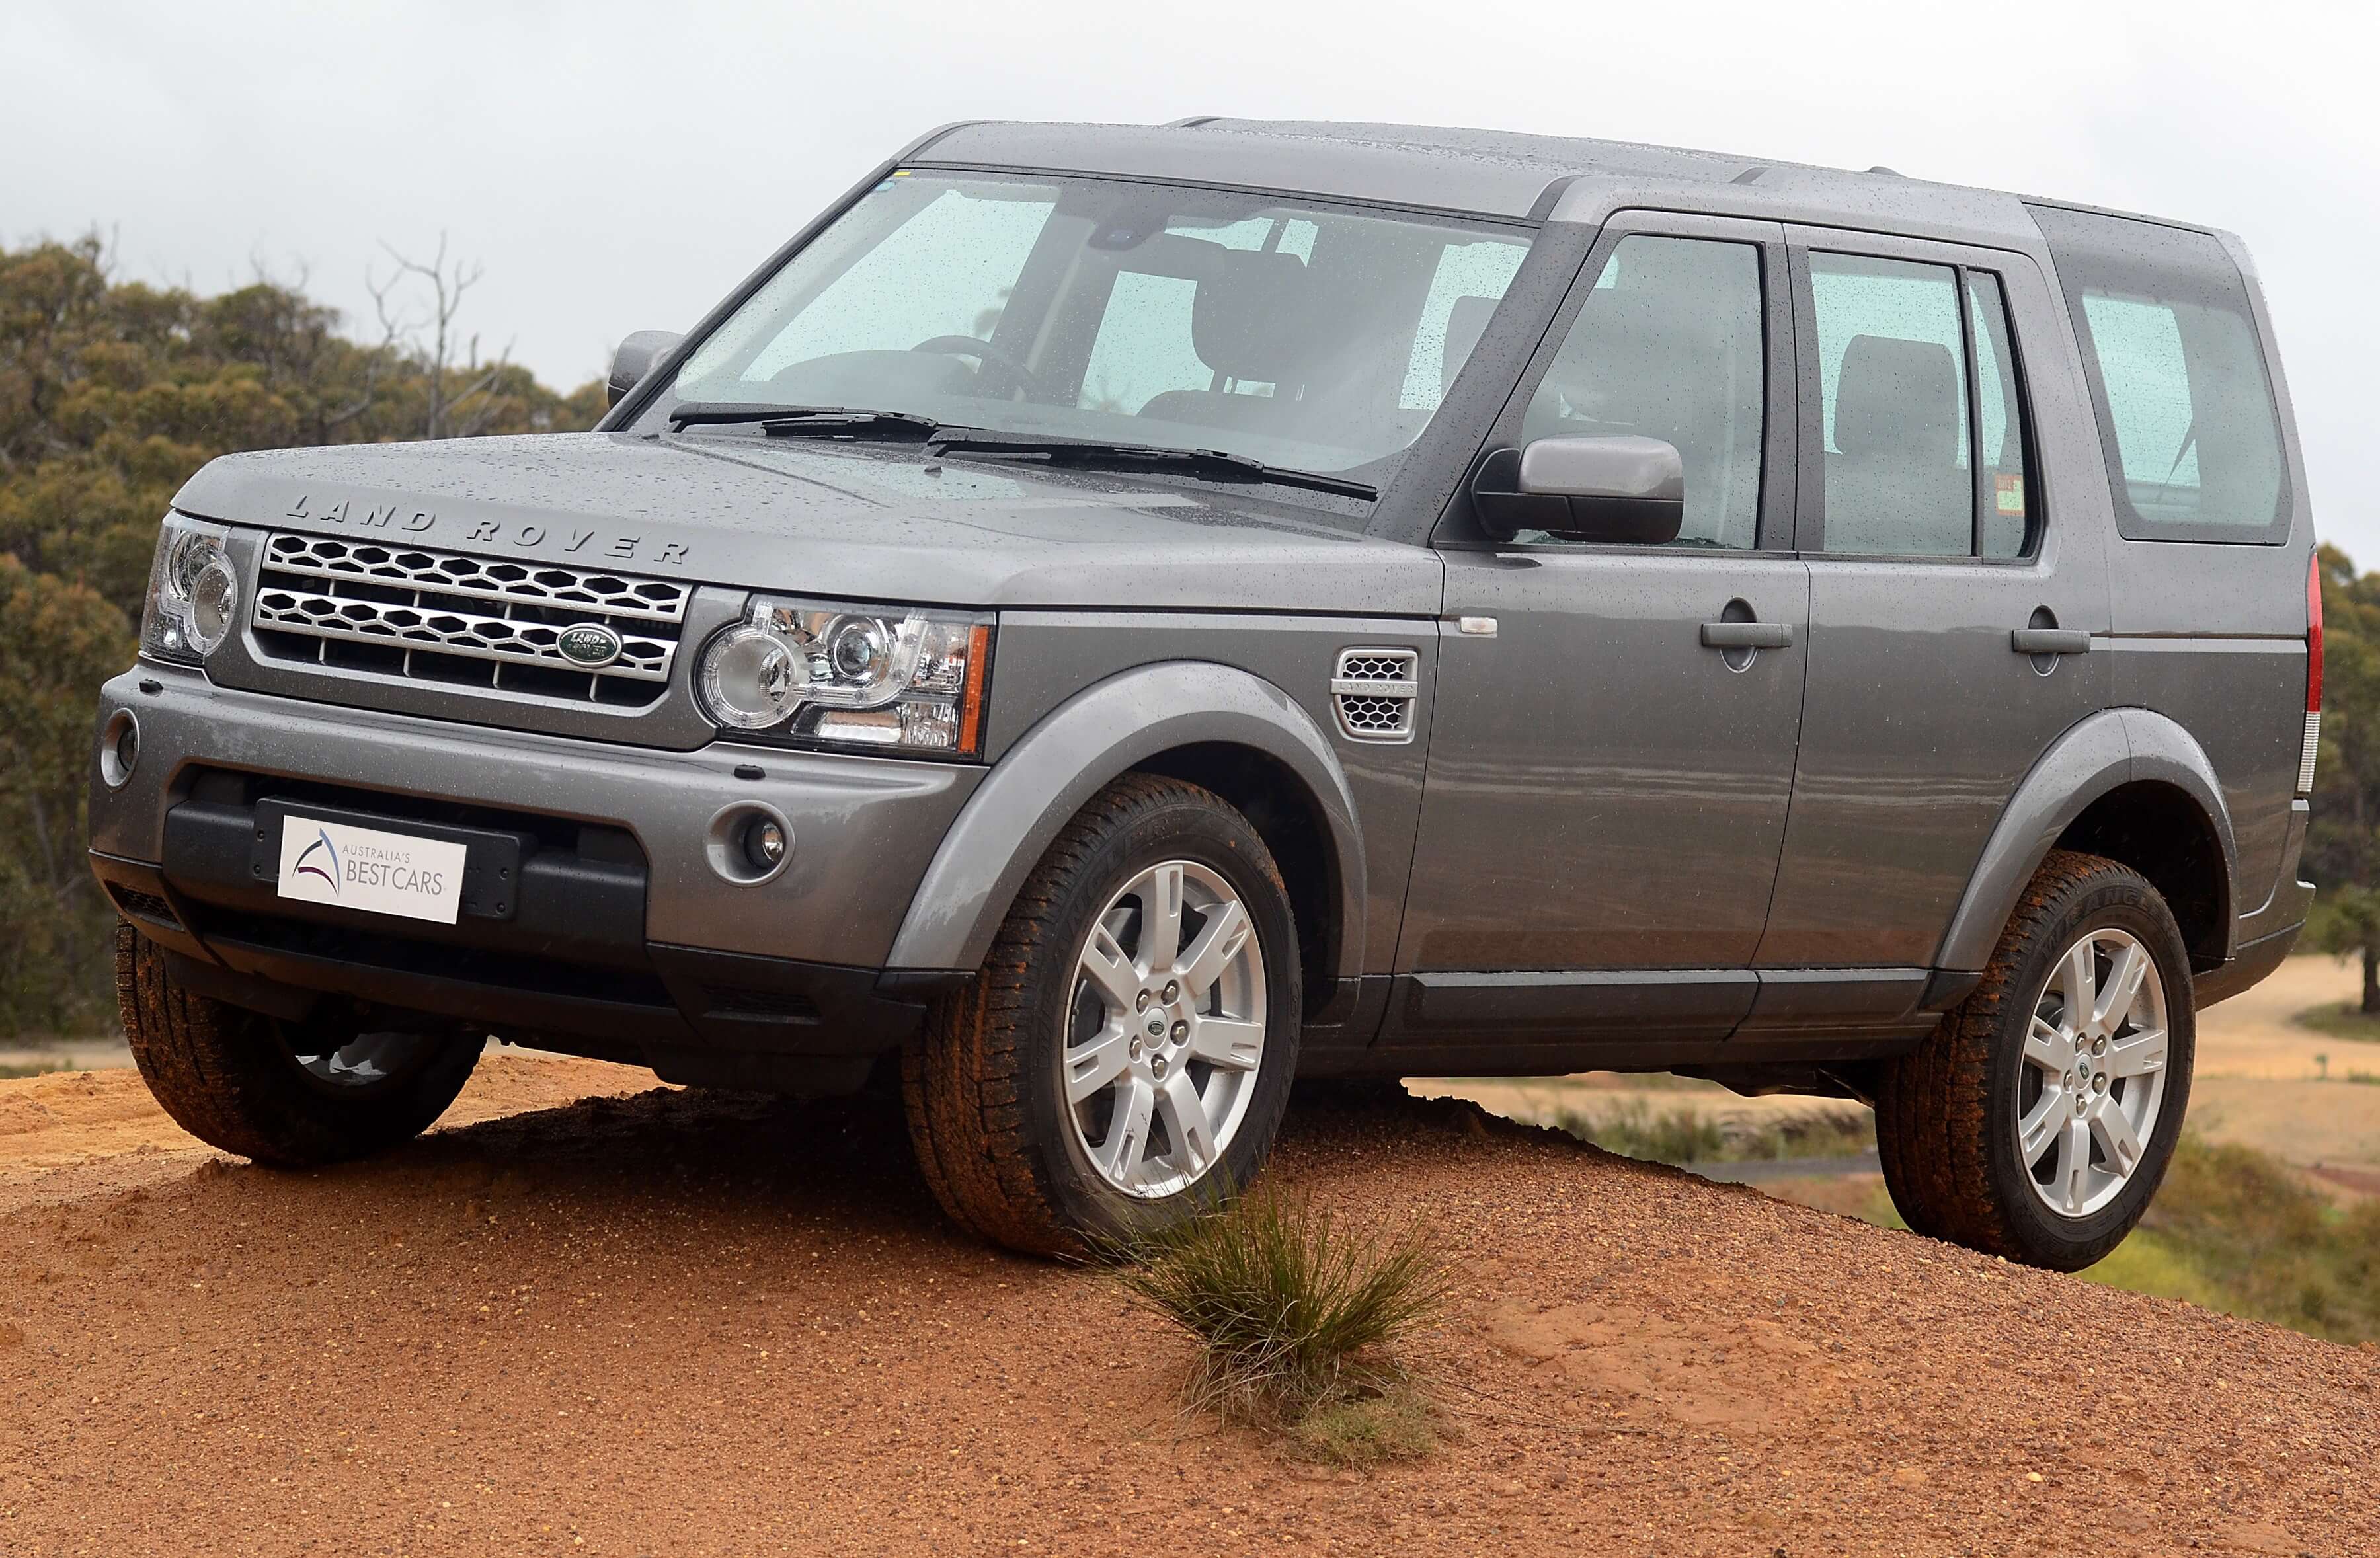 Рендж дискавери 4. Land Rover Discovery 4. Land Rover Discovery 3. Land Rover Discovery 2011. Land Rover Discovery 4 sdv6 se.